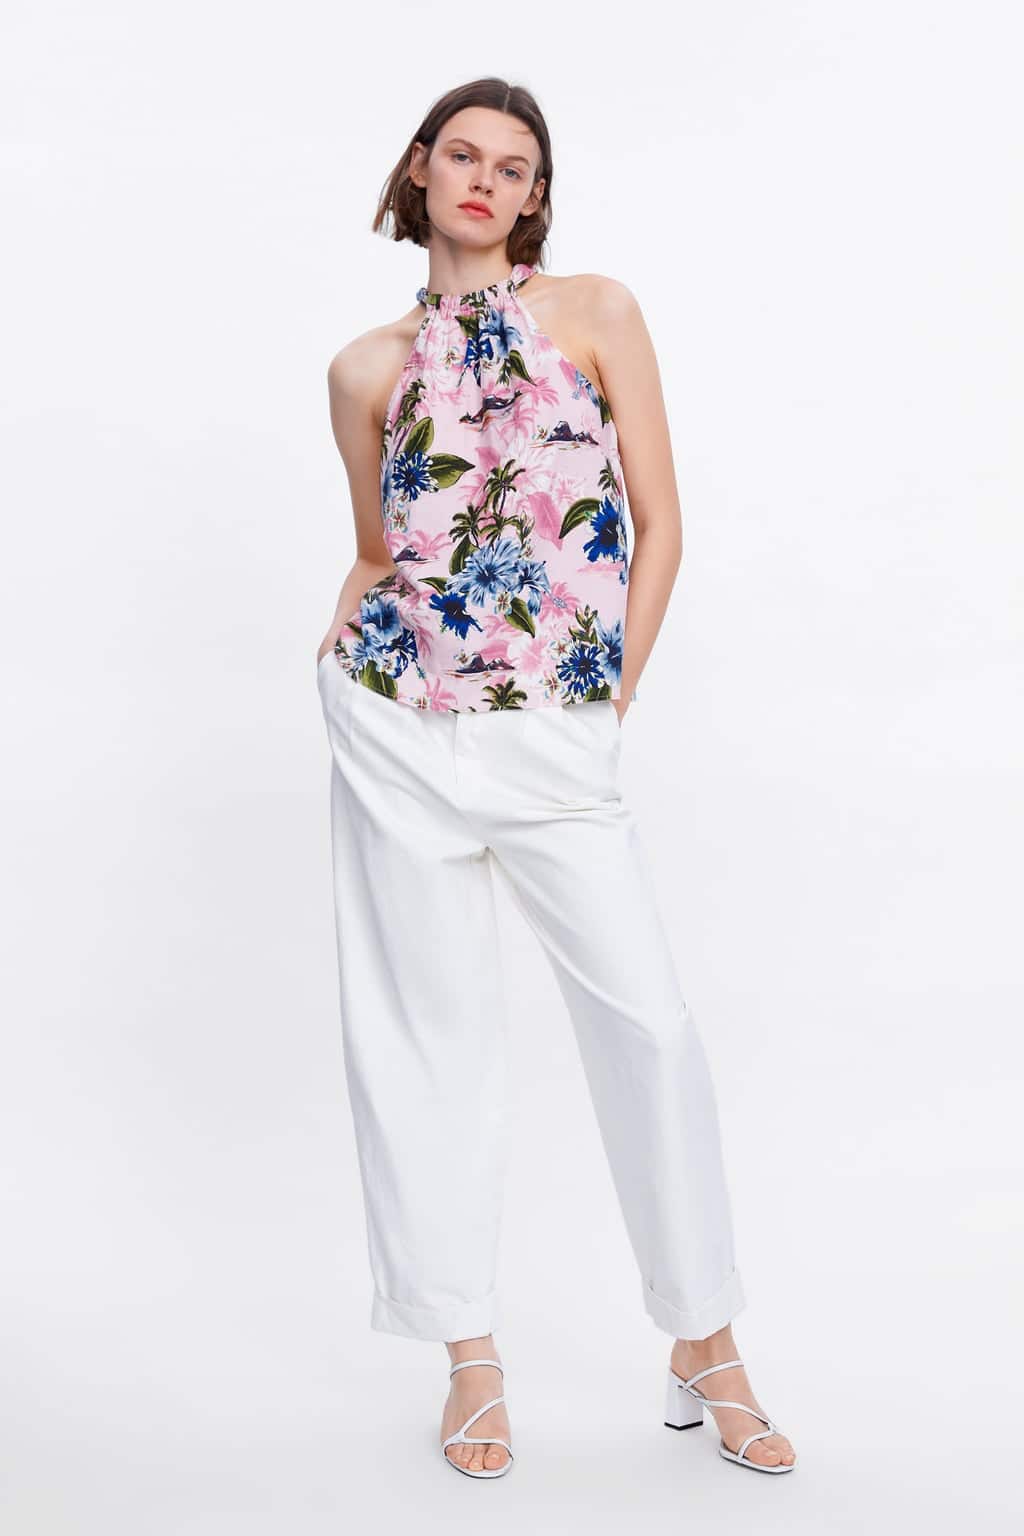 Zara Picks — 10 Pieces under $100 to Wear Now — Budget Fashionista